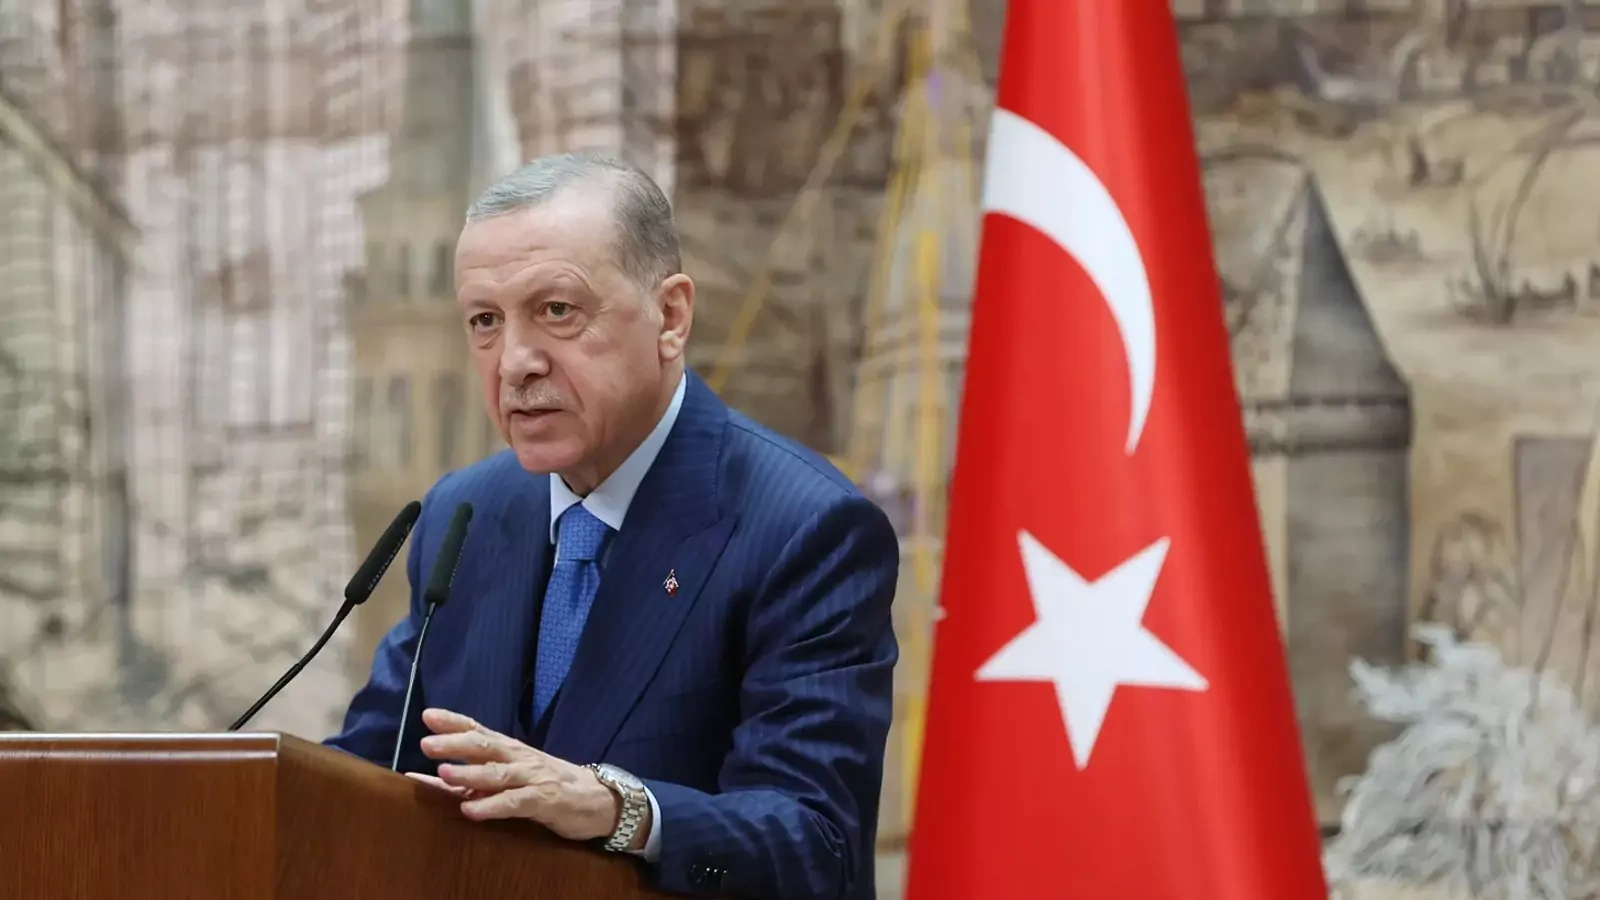 Turkish President, Recep Tayyip Erdoğan in a blue suit speaking at podium